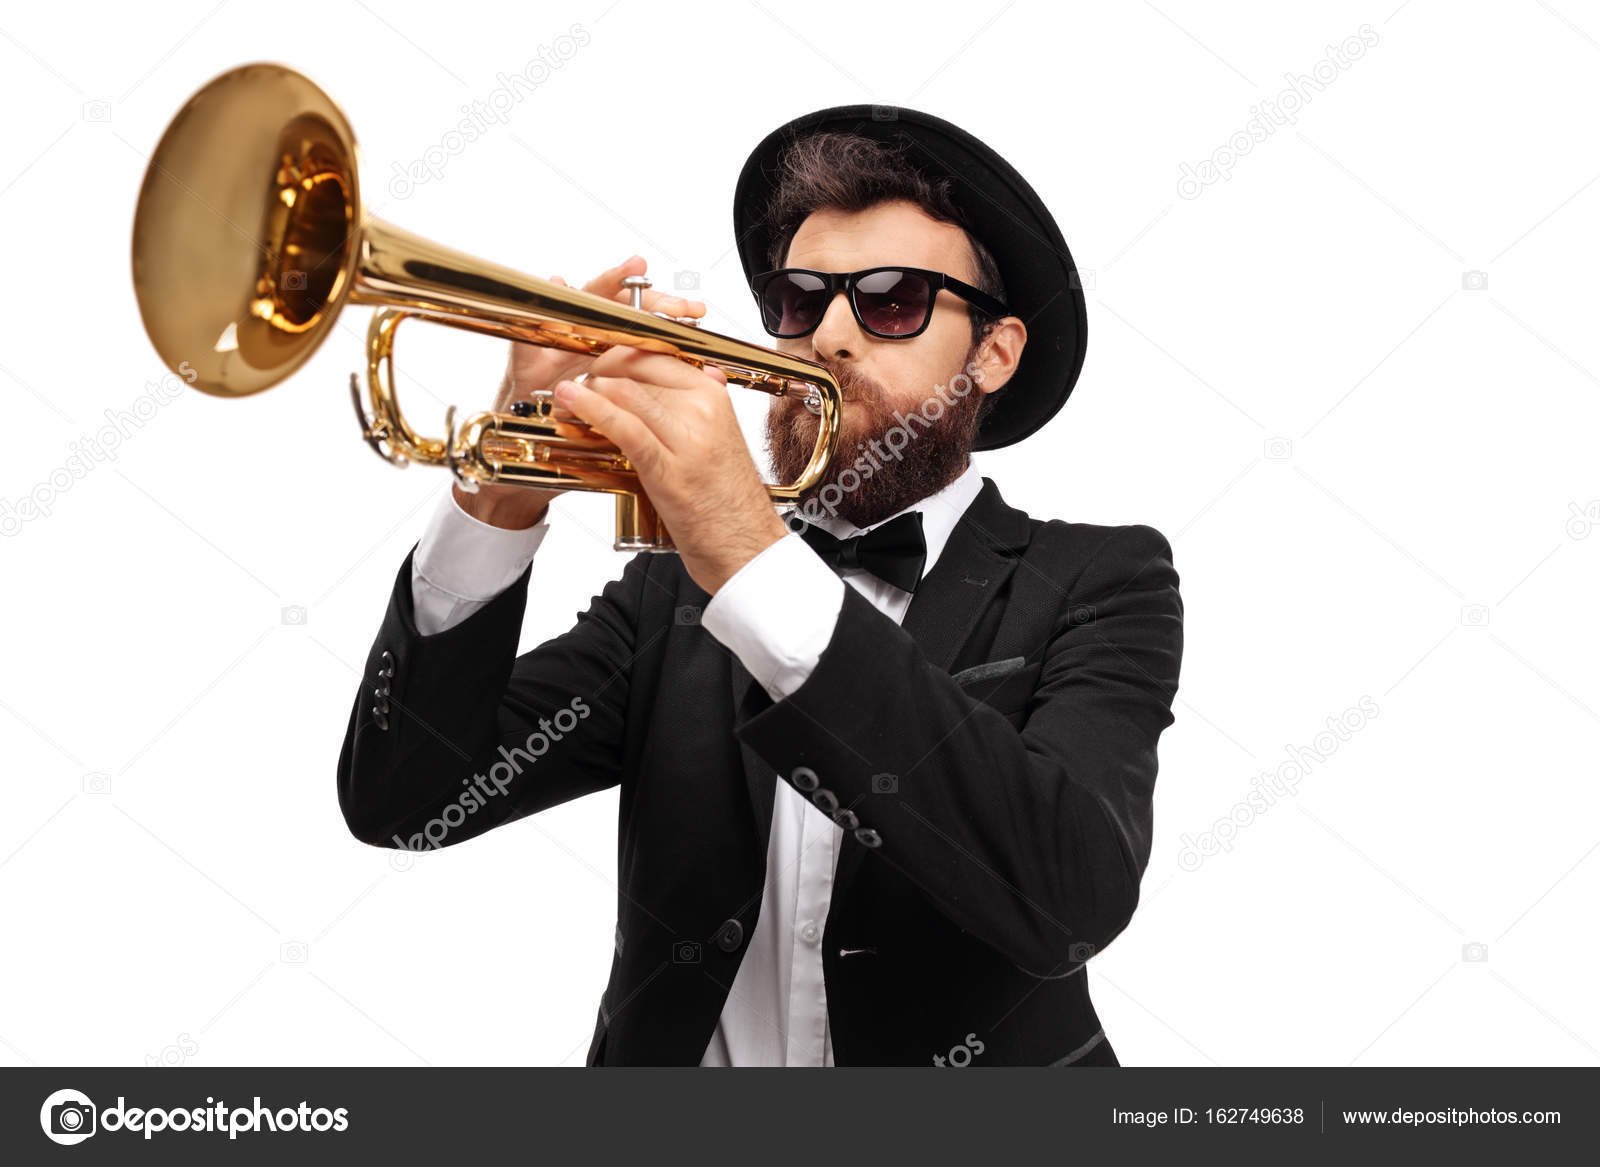 persona tocando una trompeta con entusiasmo